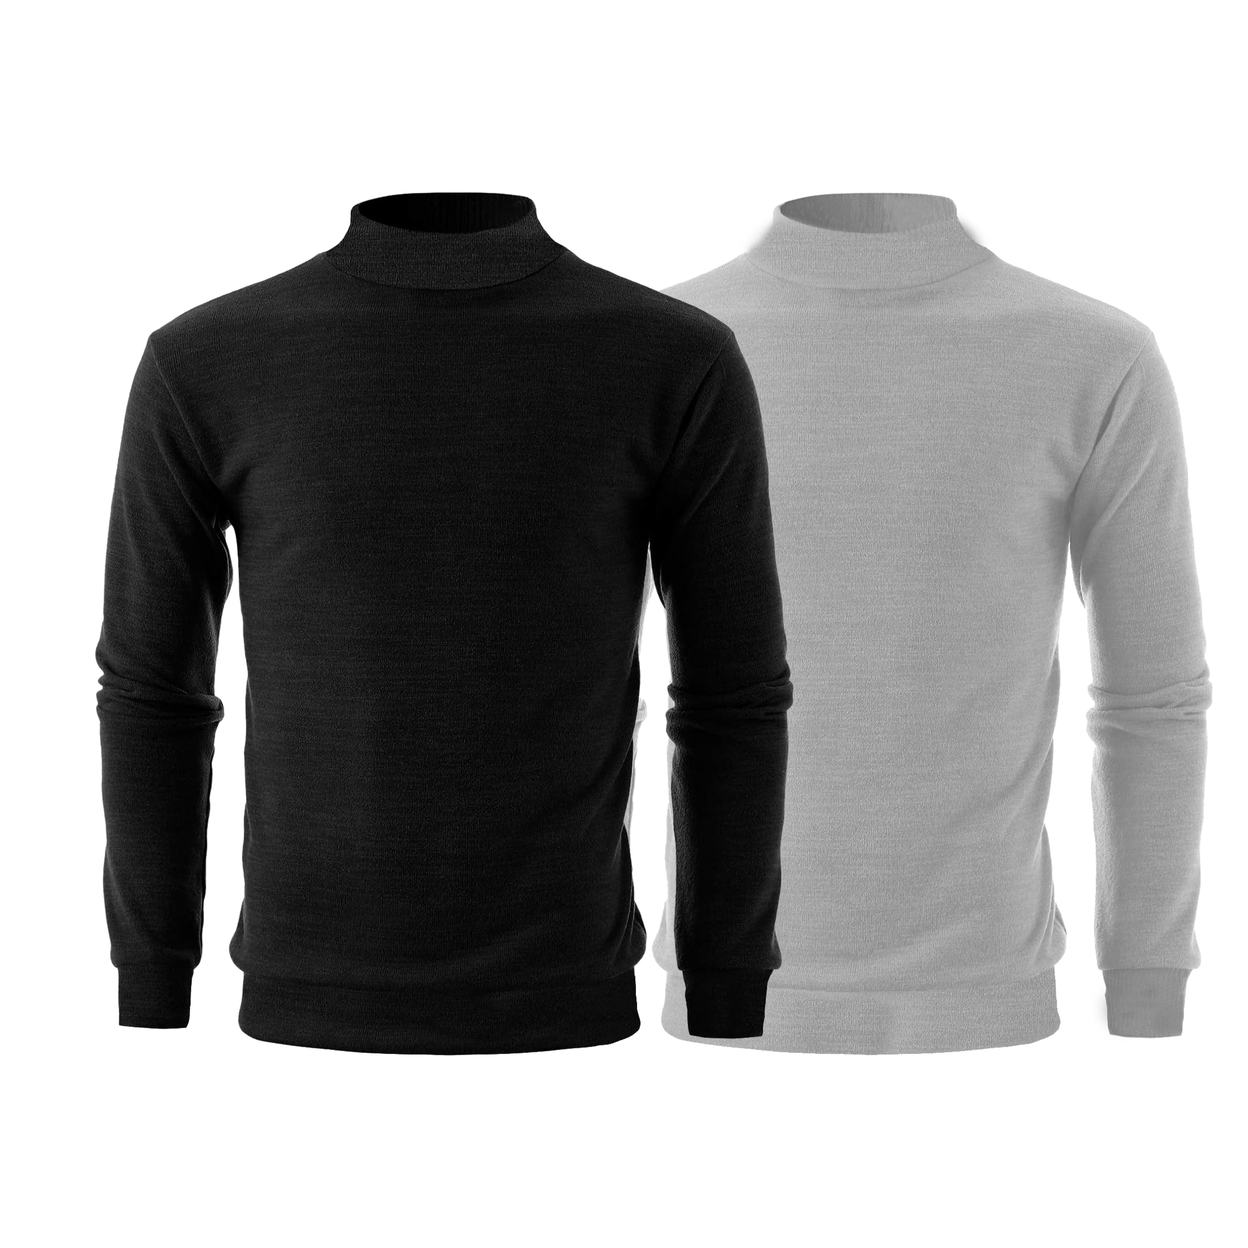 2-Pack: Men's Winter Warm Cozy Knit Slim Fit Mock Neck Sweater - Black & Navy, Medium